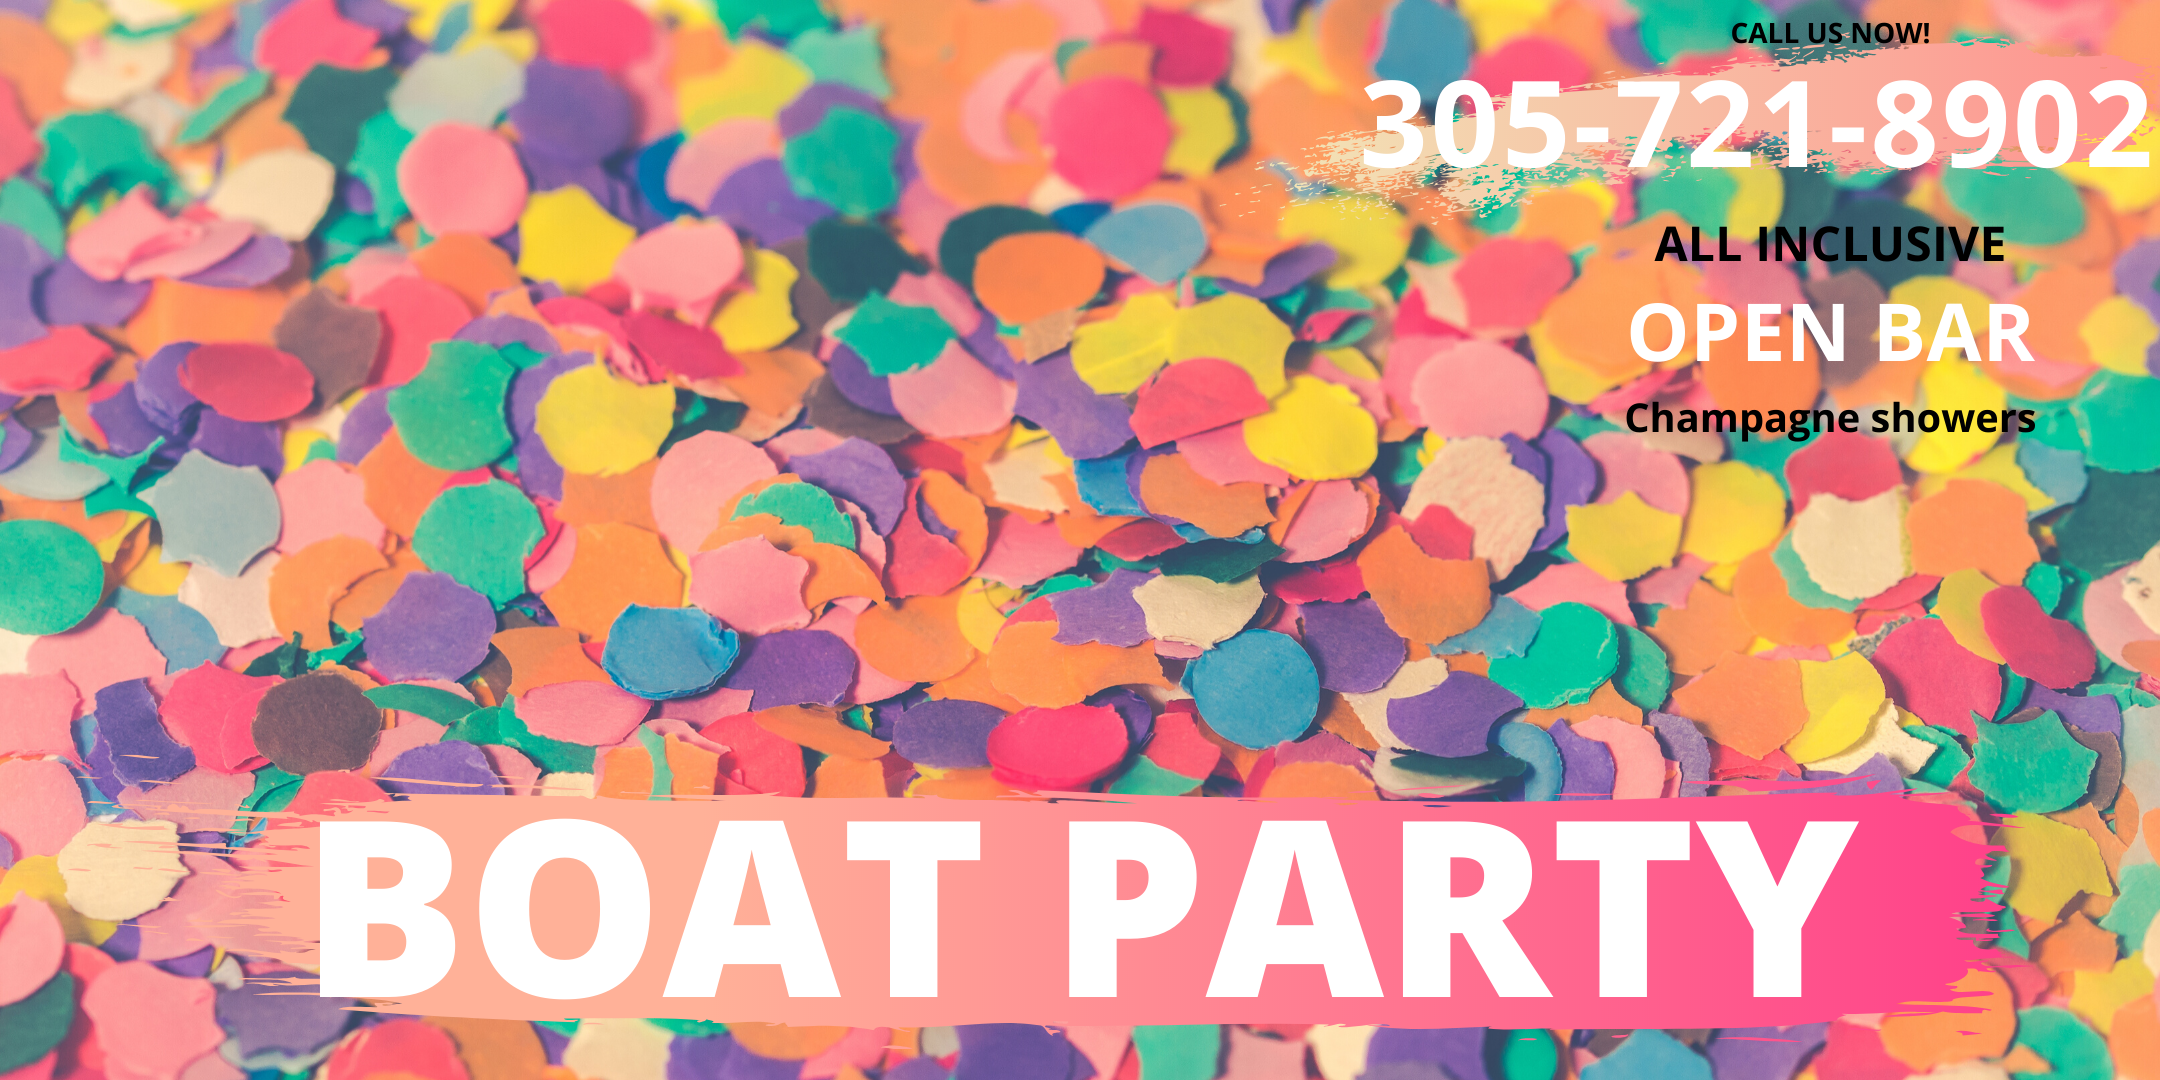 Spring Break Miami Boat Party 14 Mar 2020 